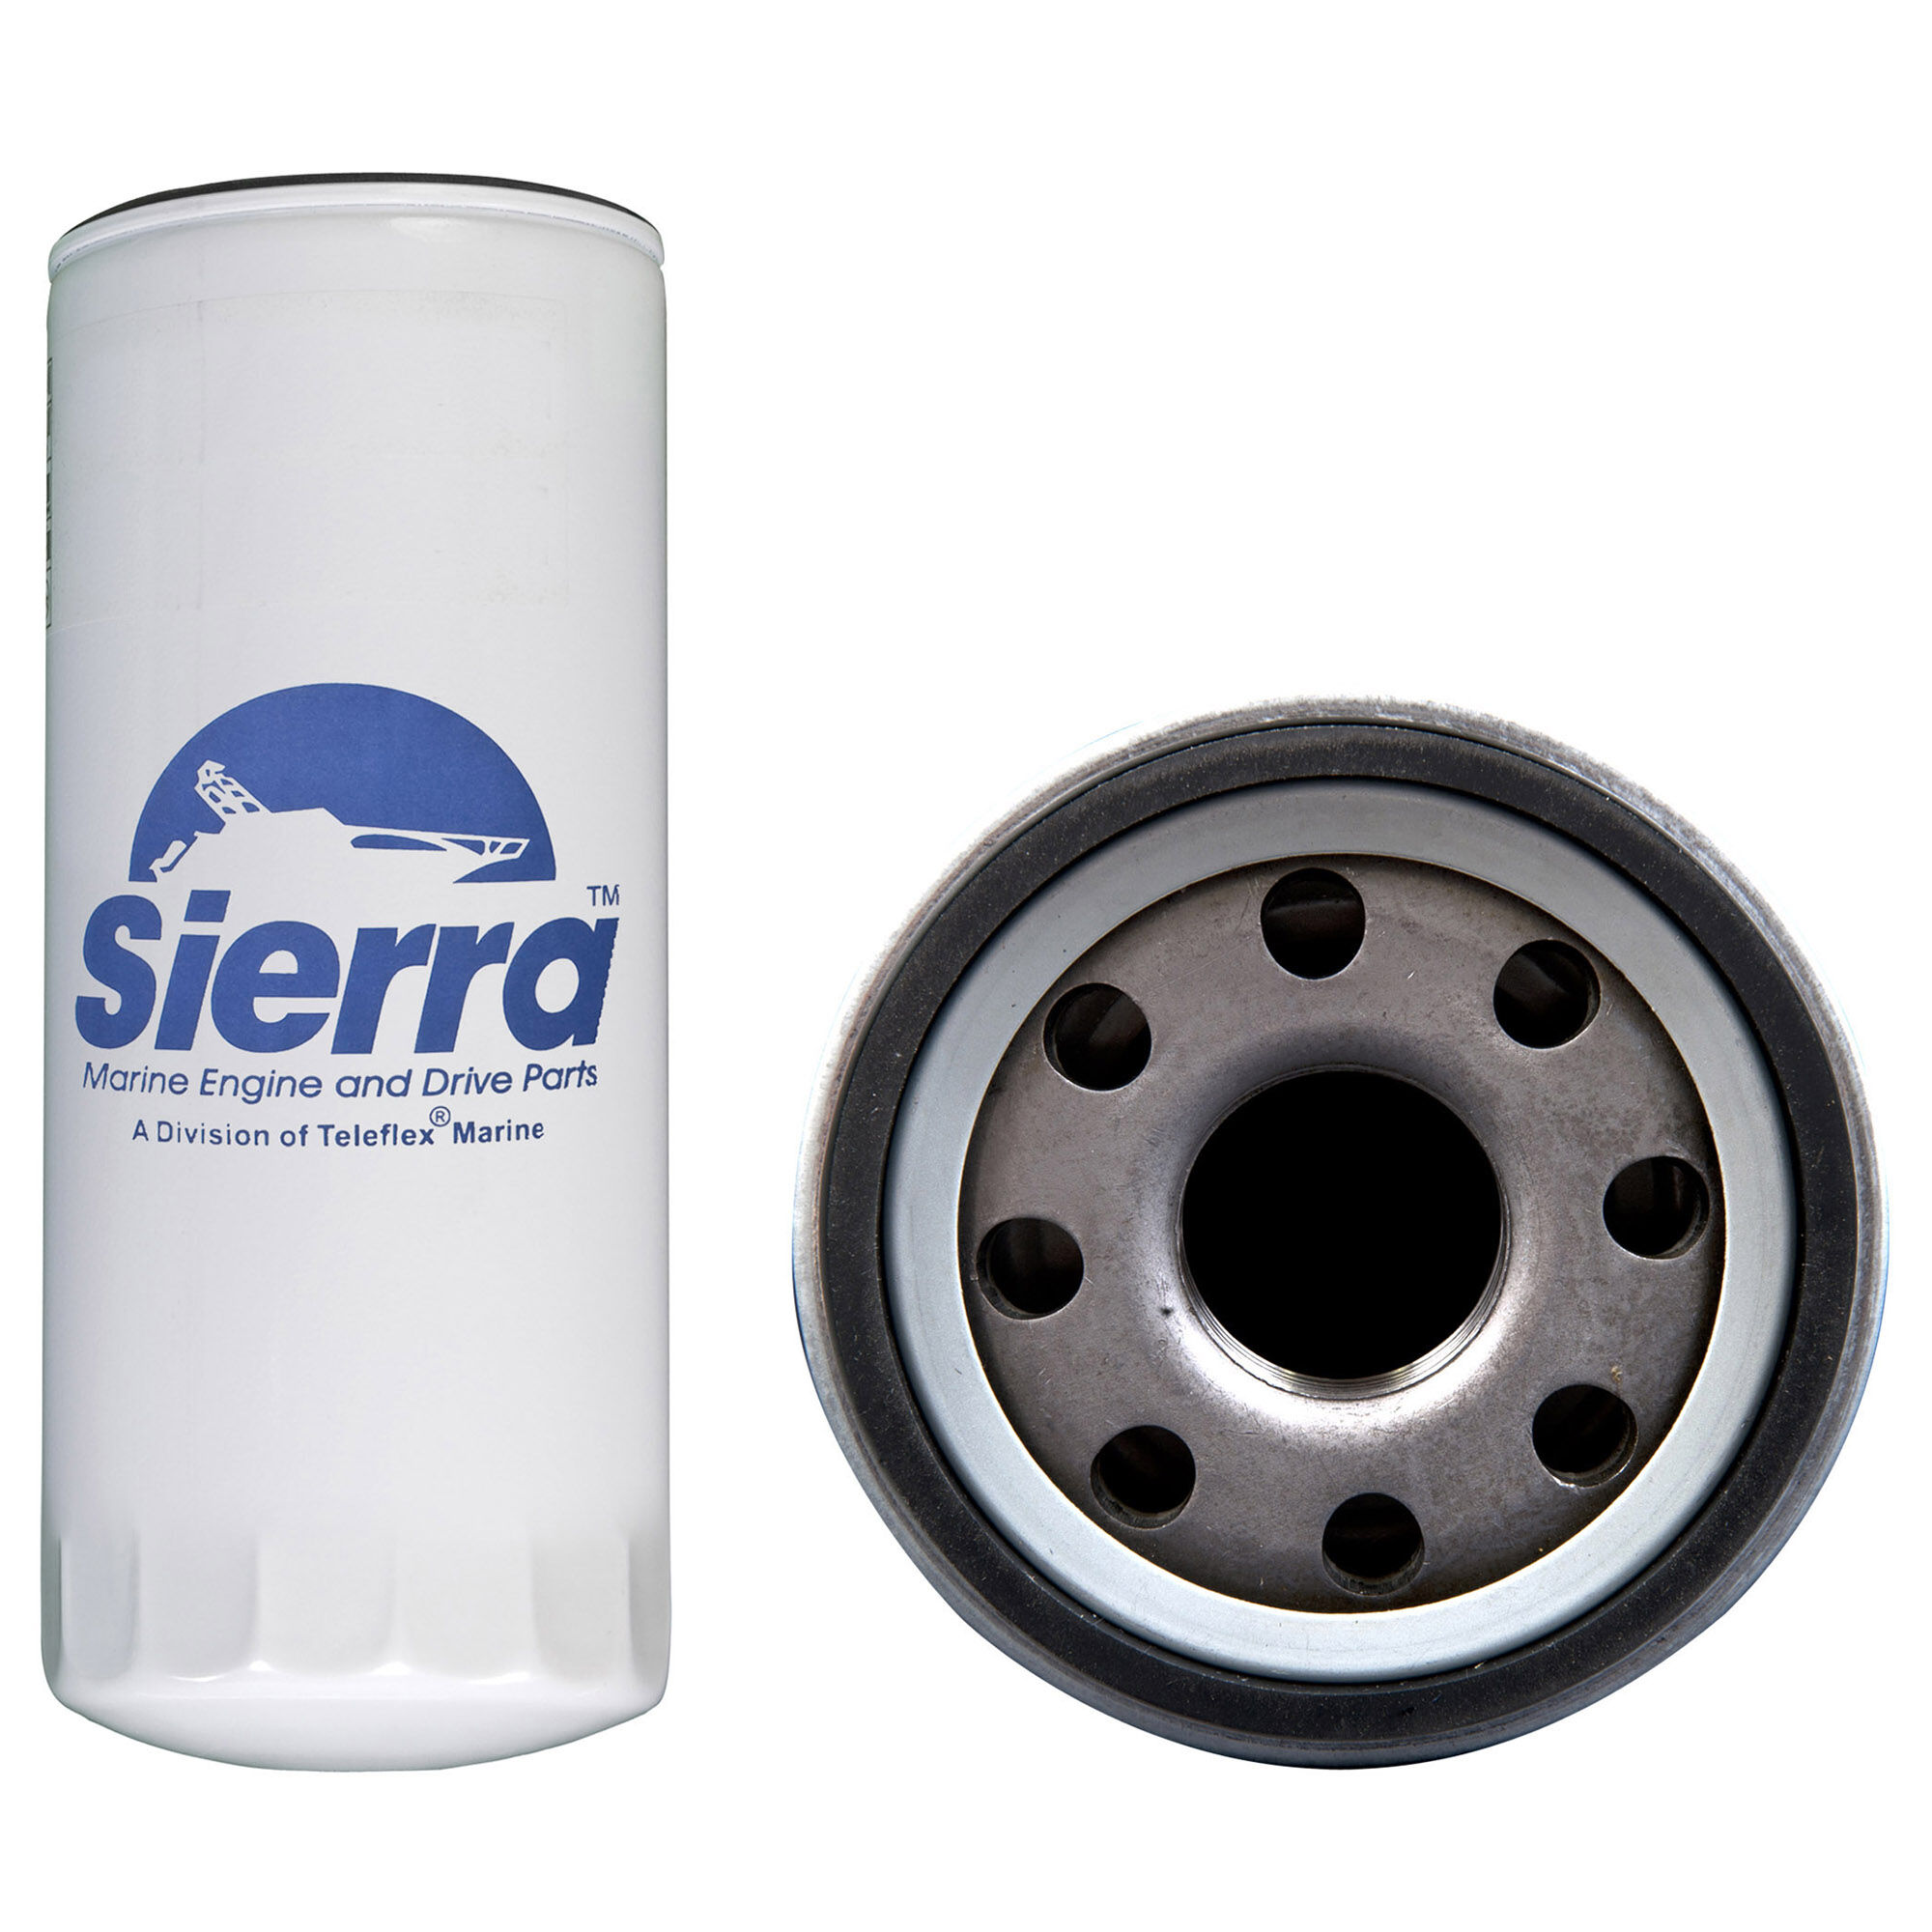 Sierra Diesel Oil Filter For Volvo Engine, Part #18-0034